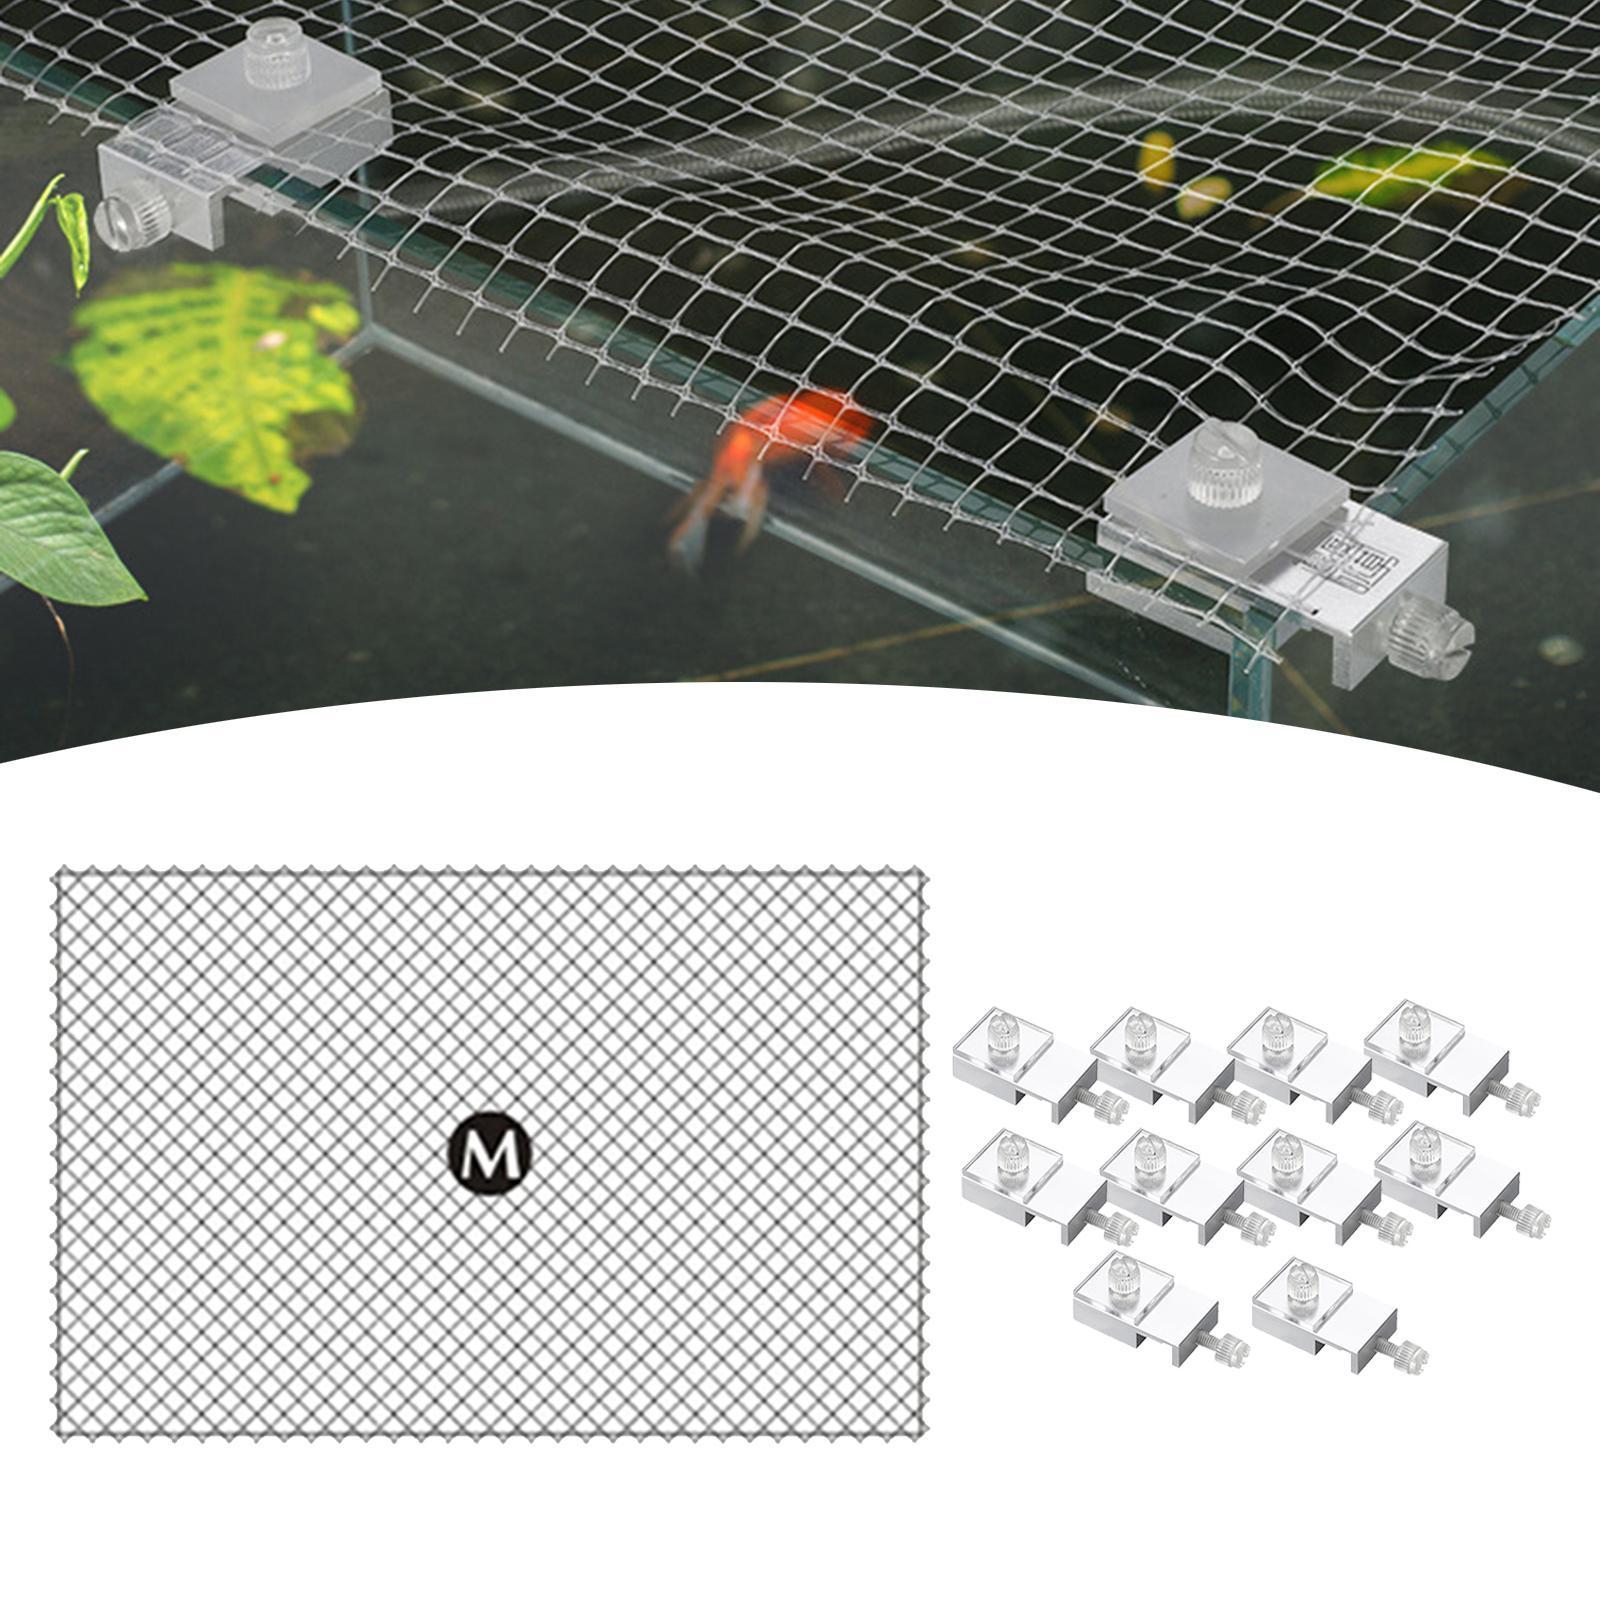 Aquarium Screen Nets, Anti Jumping Net, Aquarium Jump Guard, Mesh Screen Netting Easy to Install, Fish Tank Cover, Mesh Netting for Home